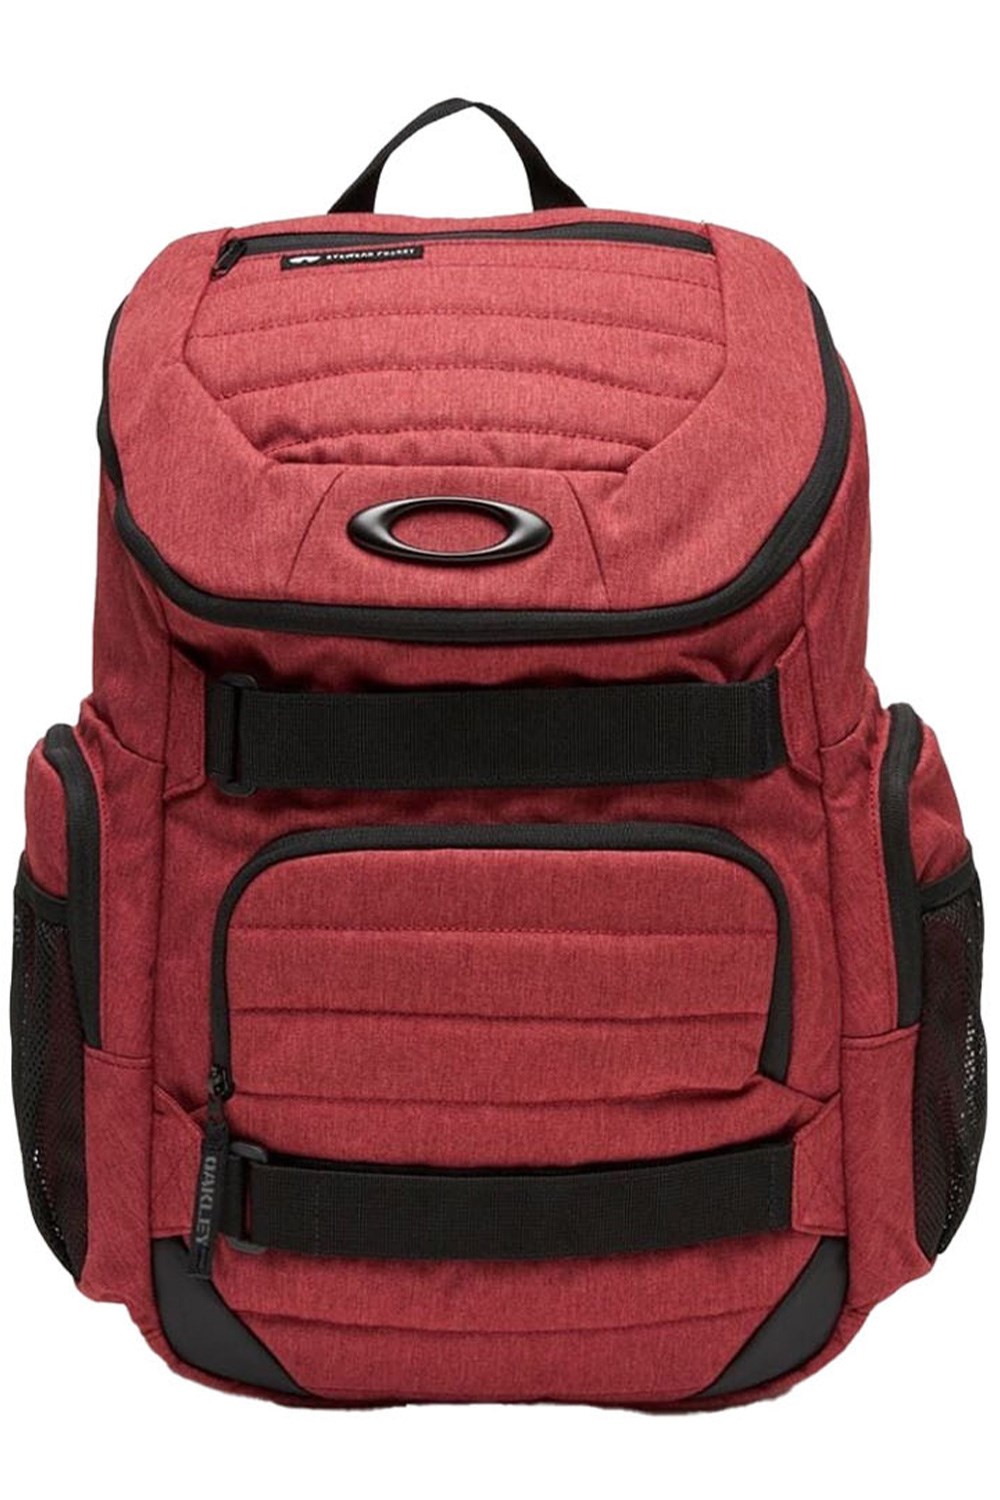 Enduro 3. 0 30L Backpack -